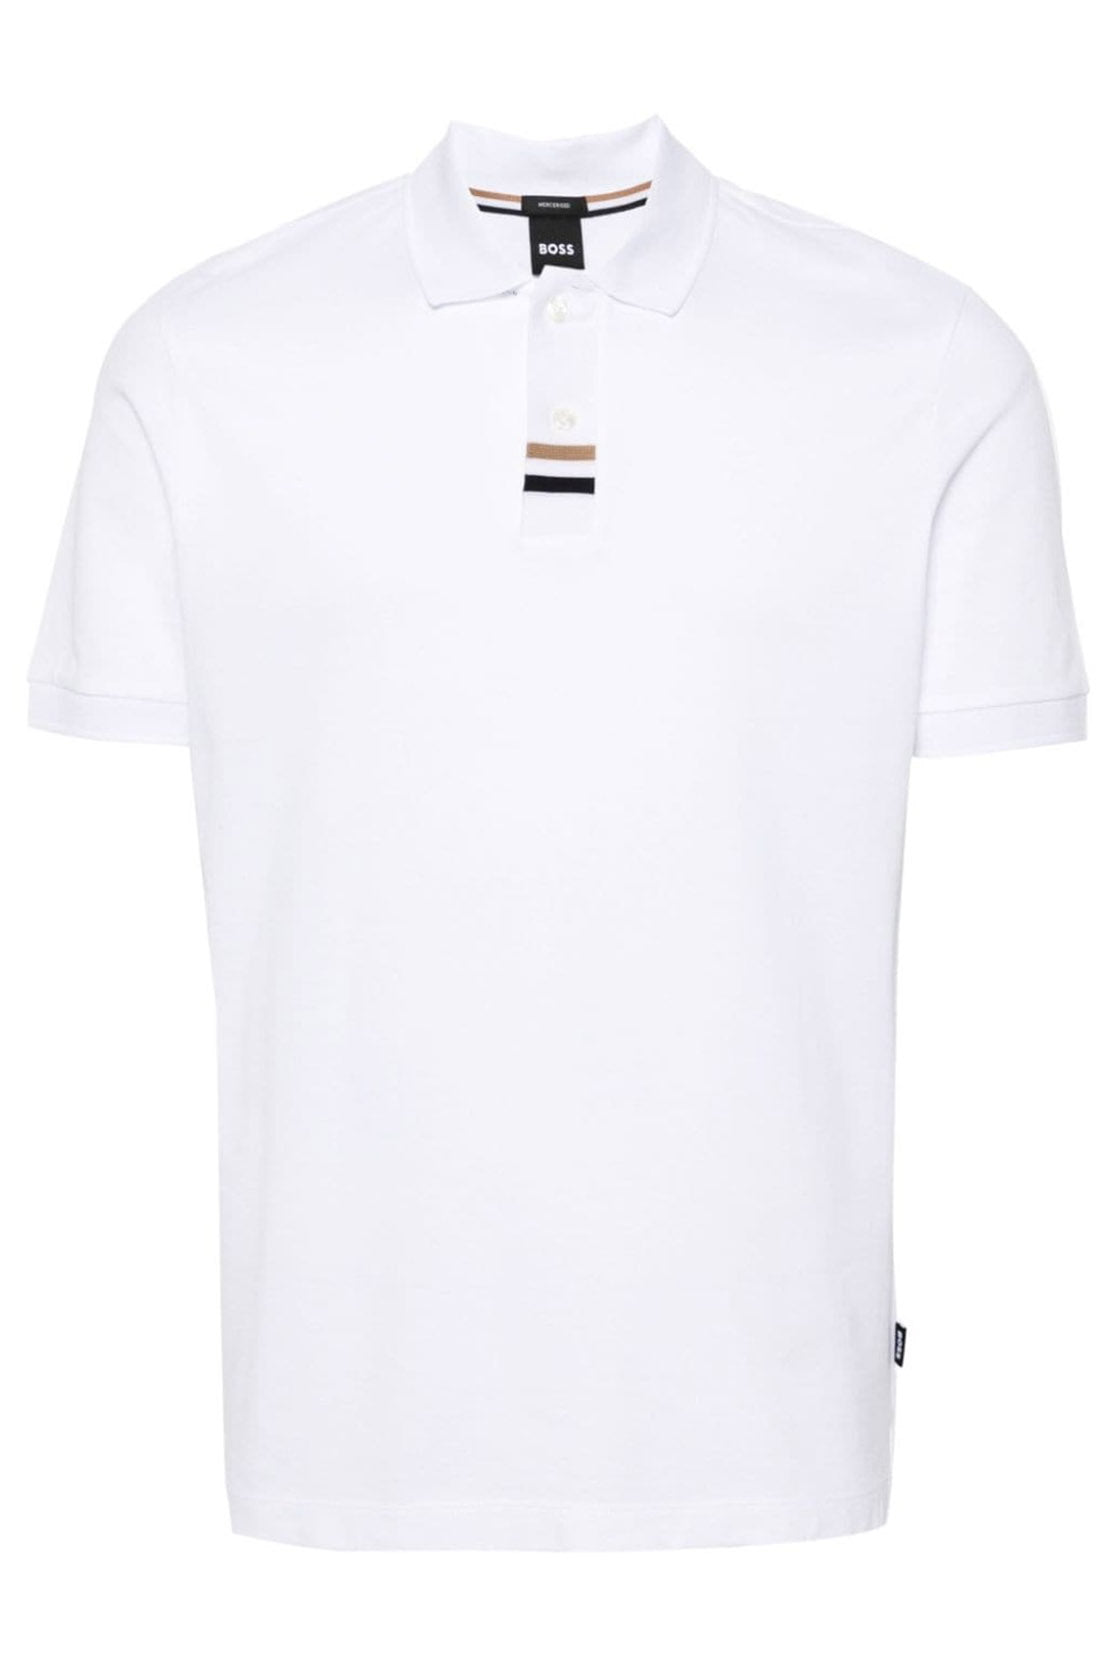 BOSS - PARLAY 424 White Regular Fit Pique Cotton Polo Shirt 50505776 100